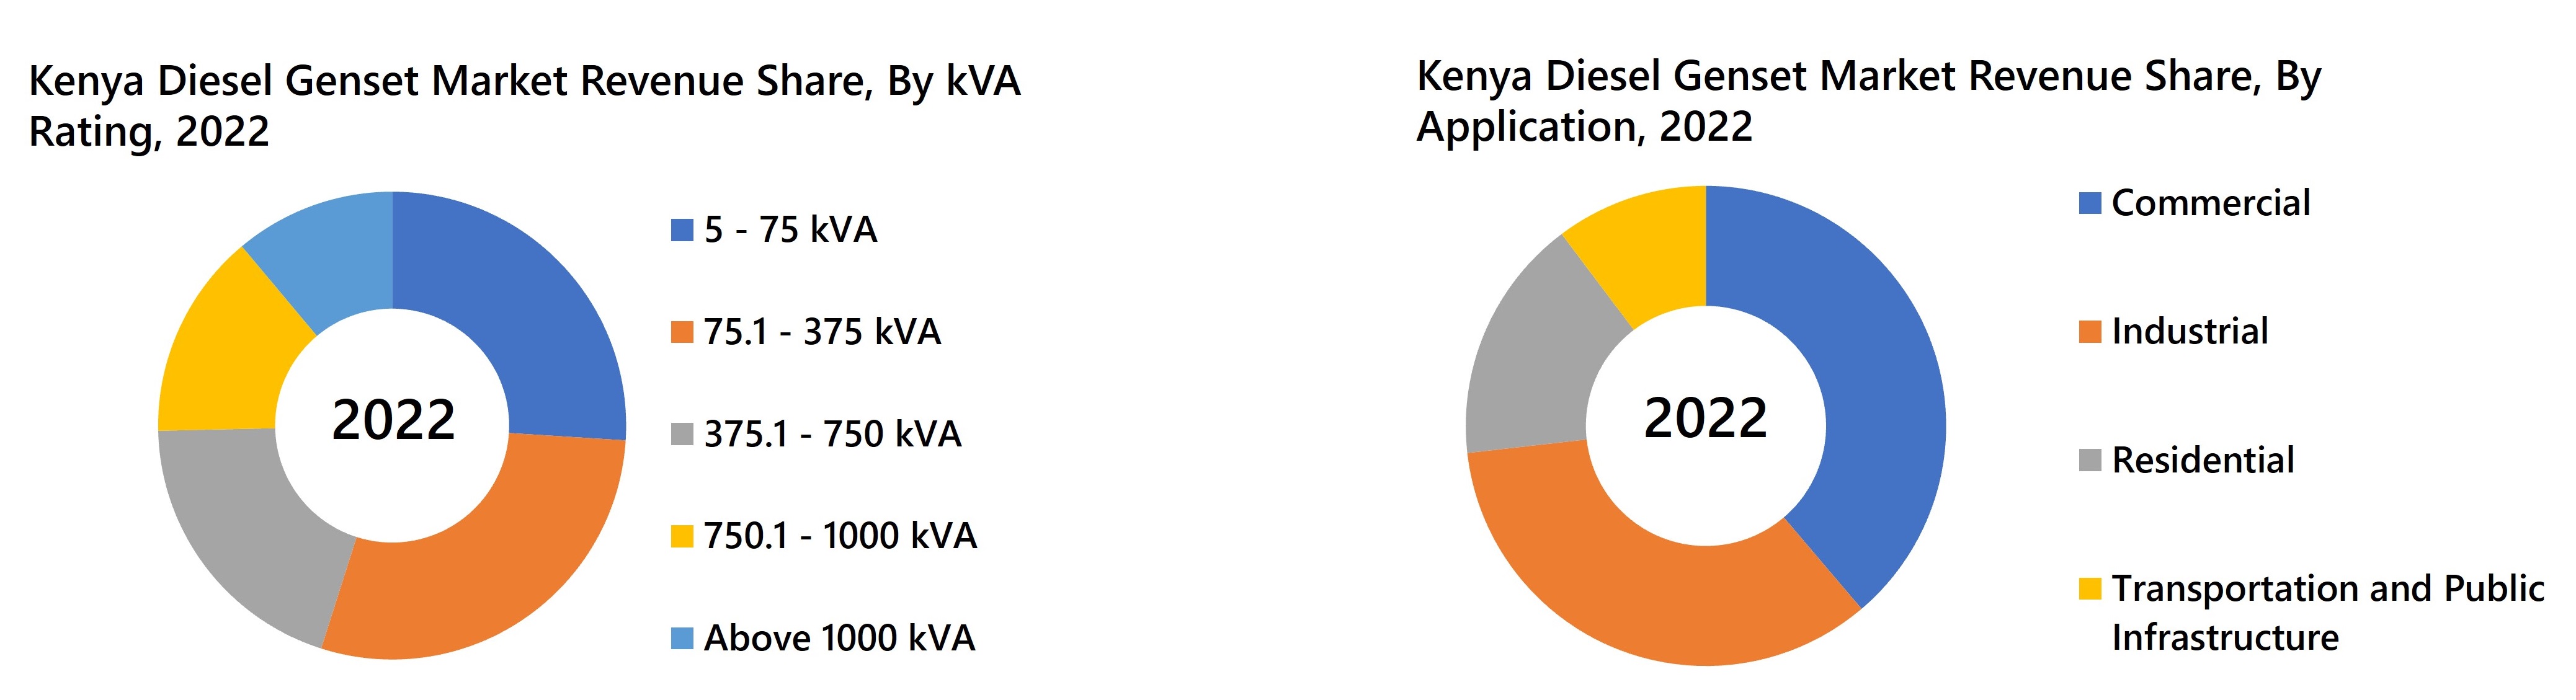 Kenya Diesel Genset Market Revenue Share